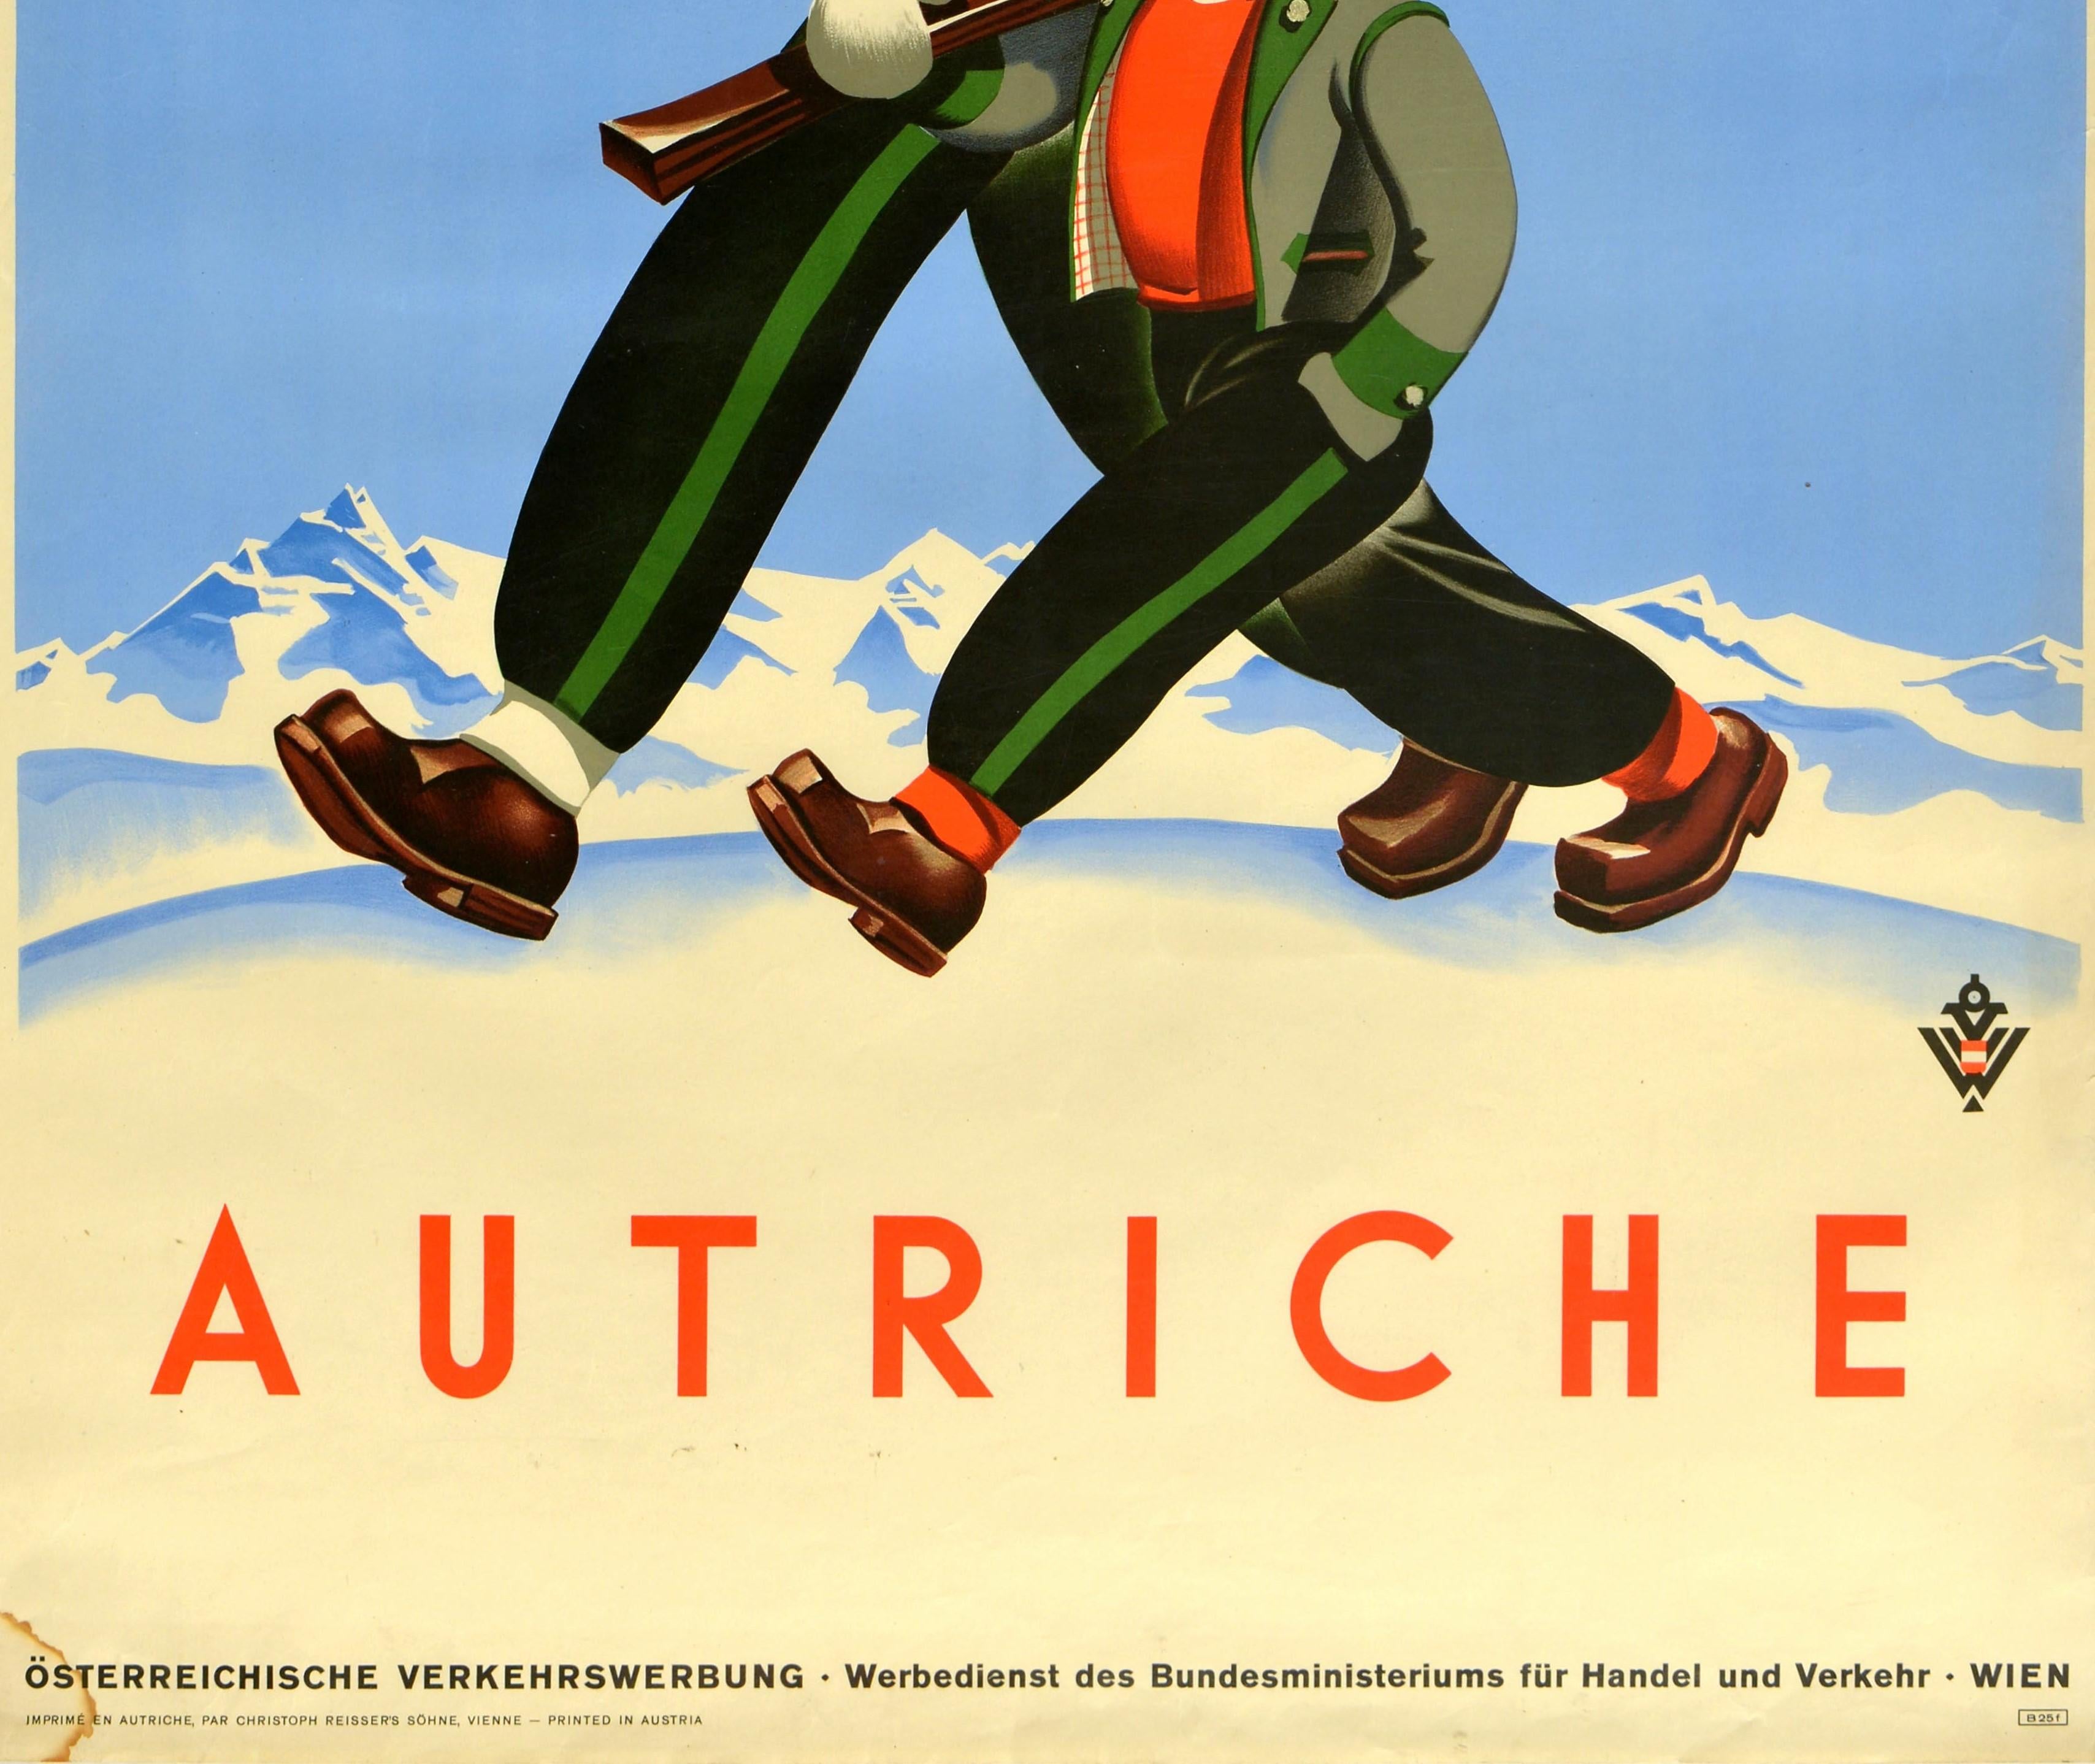 Austrian Original Vintage Poster Autriche Austria Winter Sport Ski Travel Mountain Skier